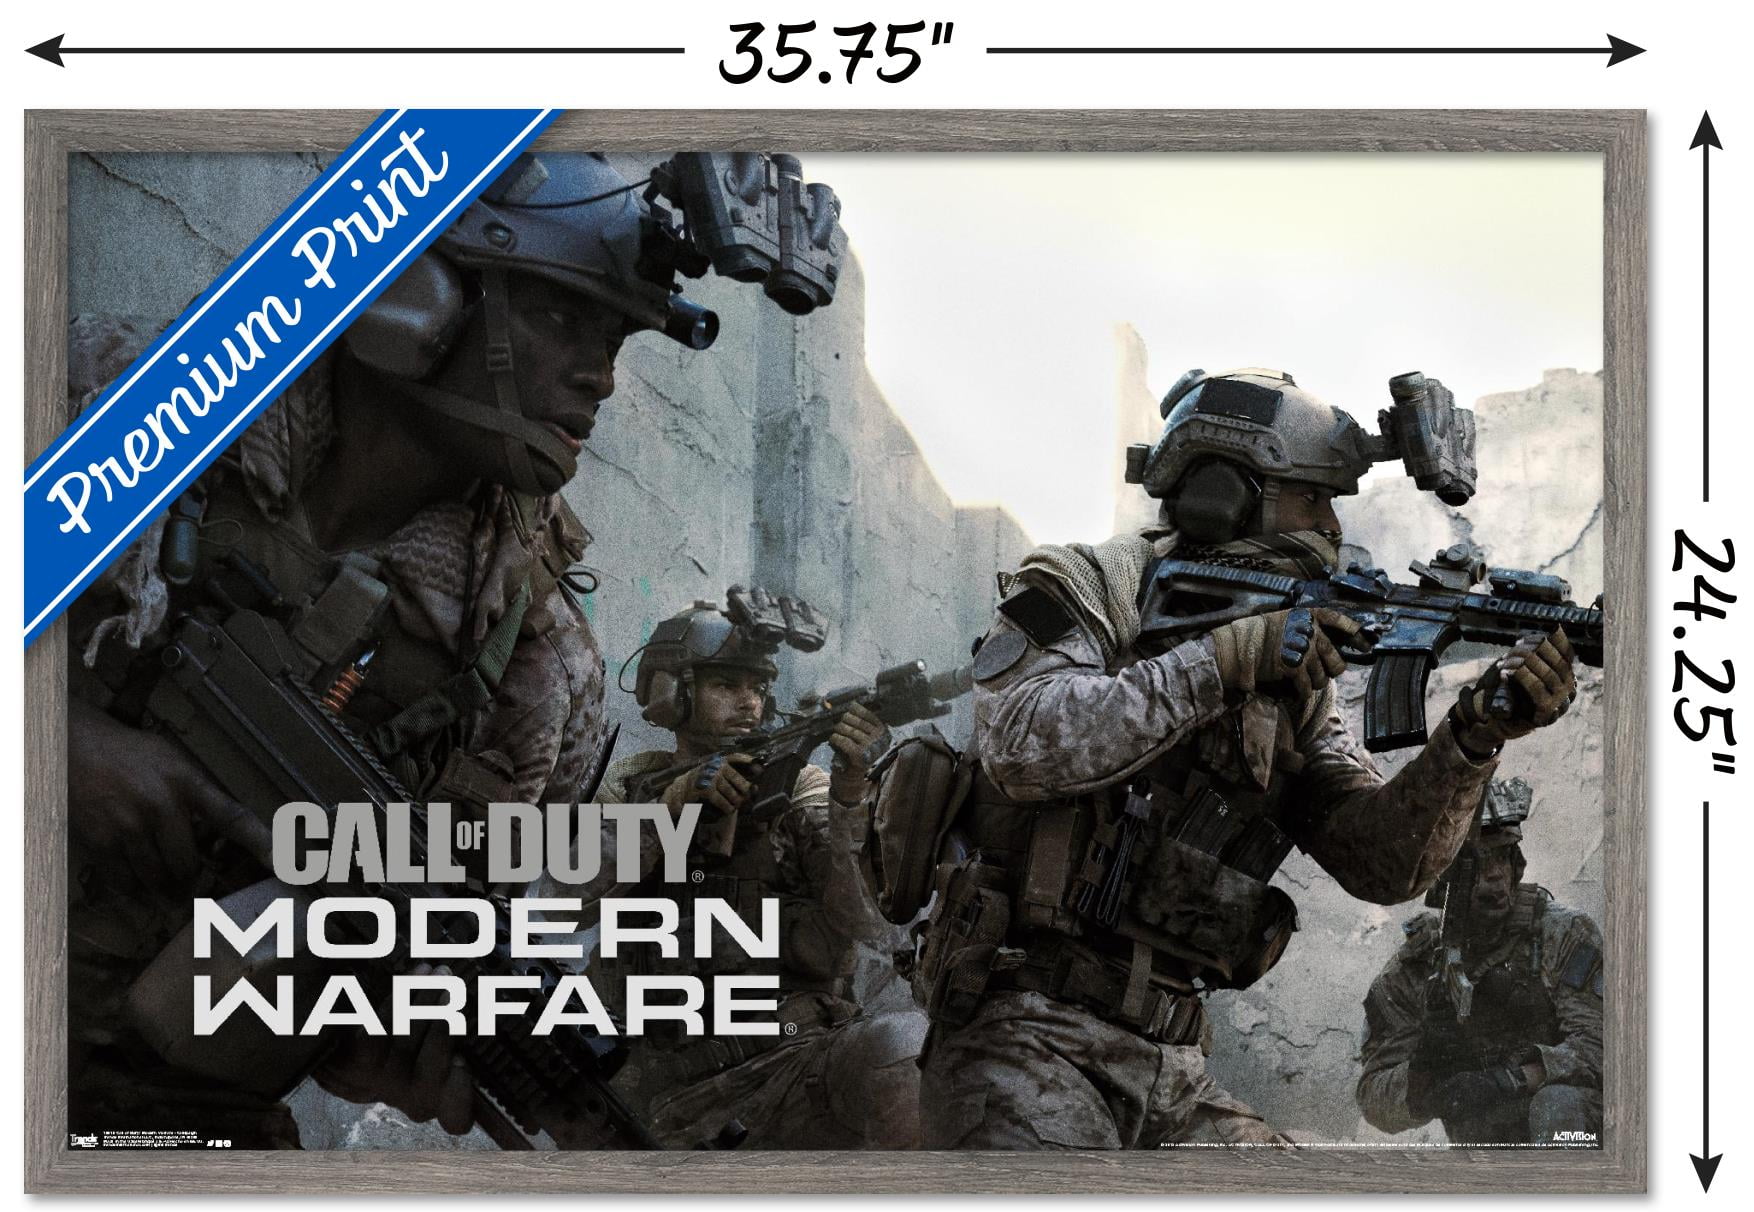 Call of Duty: Modern Warfare - Campaign Wall Poster, 22.375